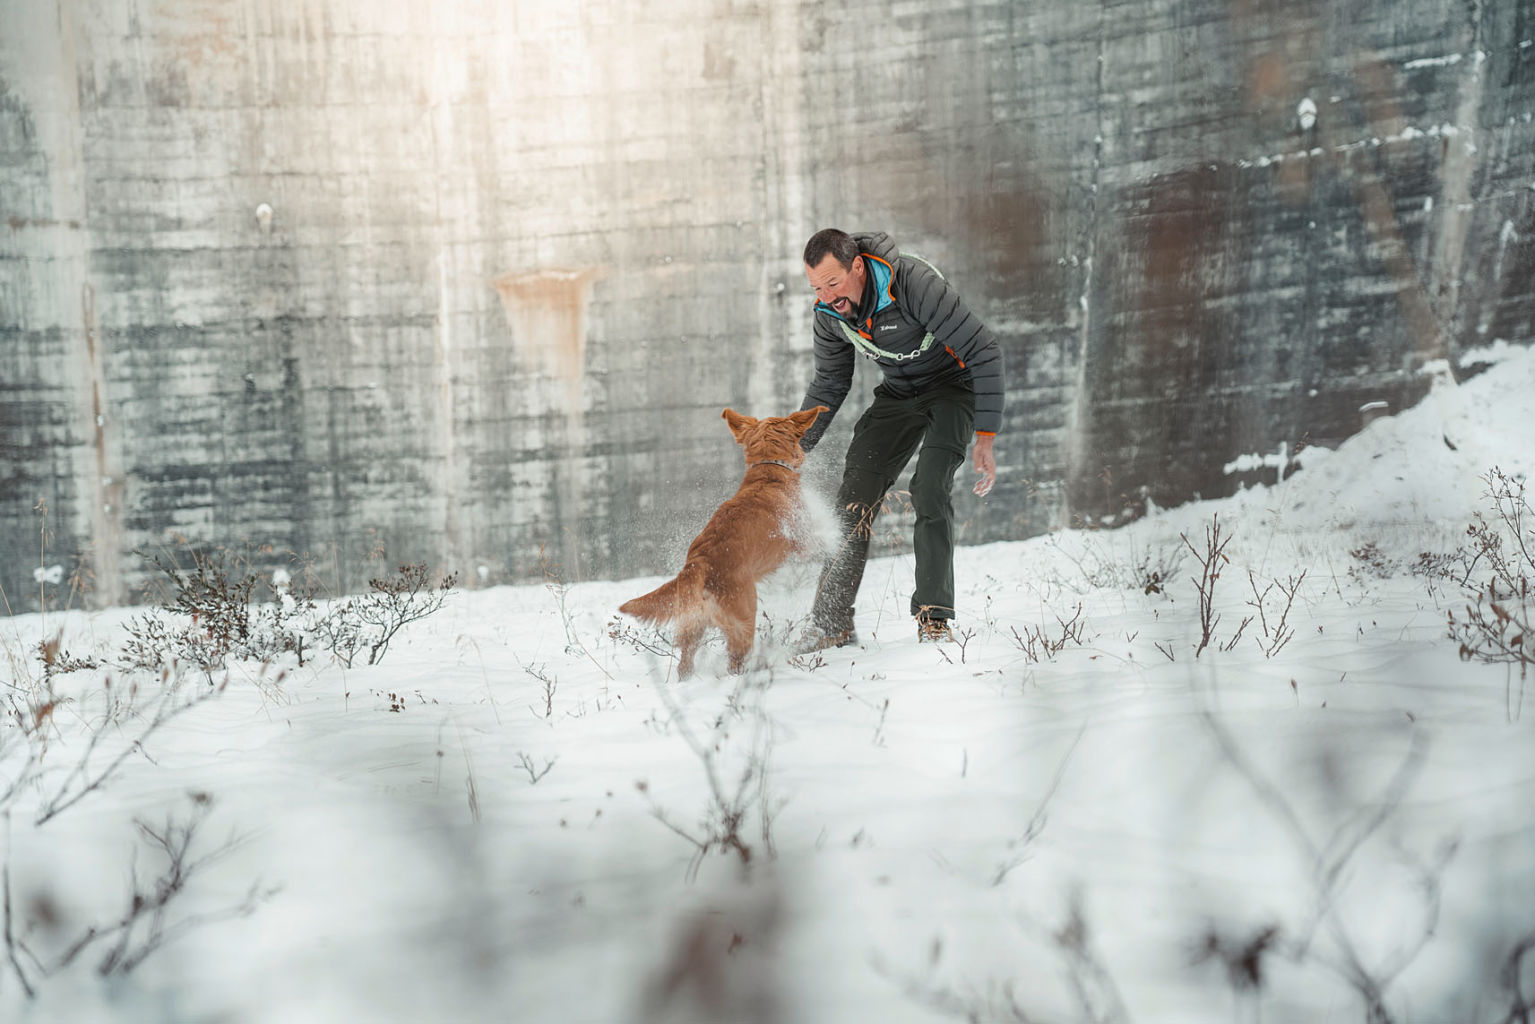 Flo and his avalanche dog, Valais, Switzerland